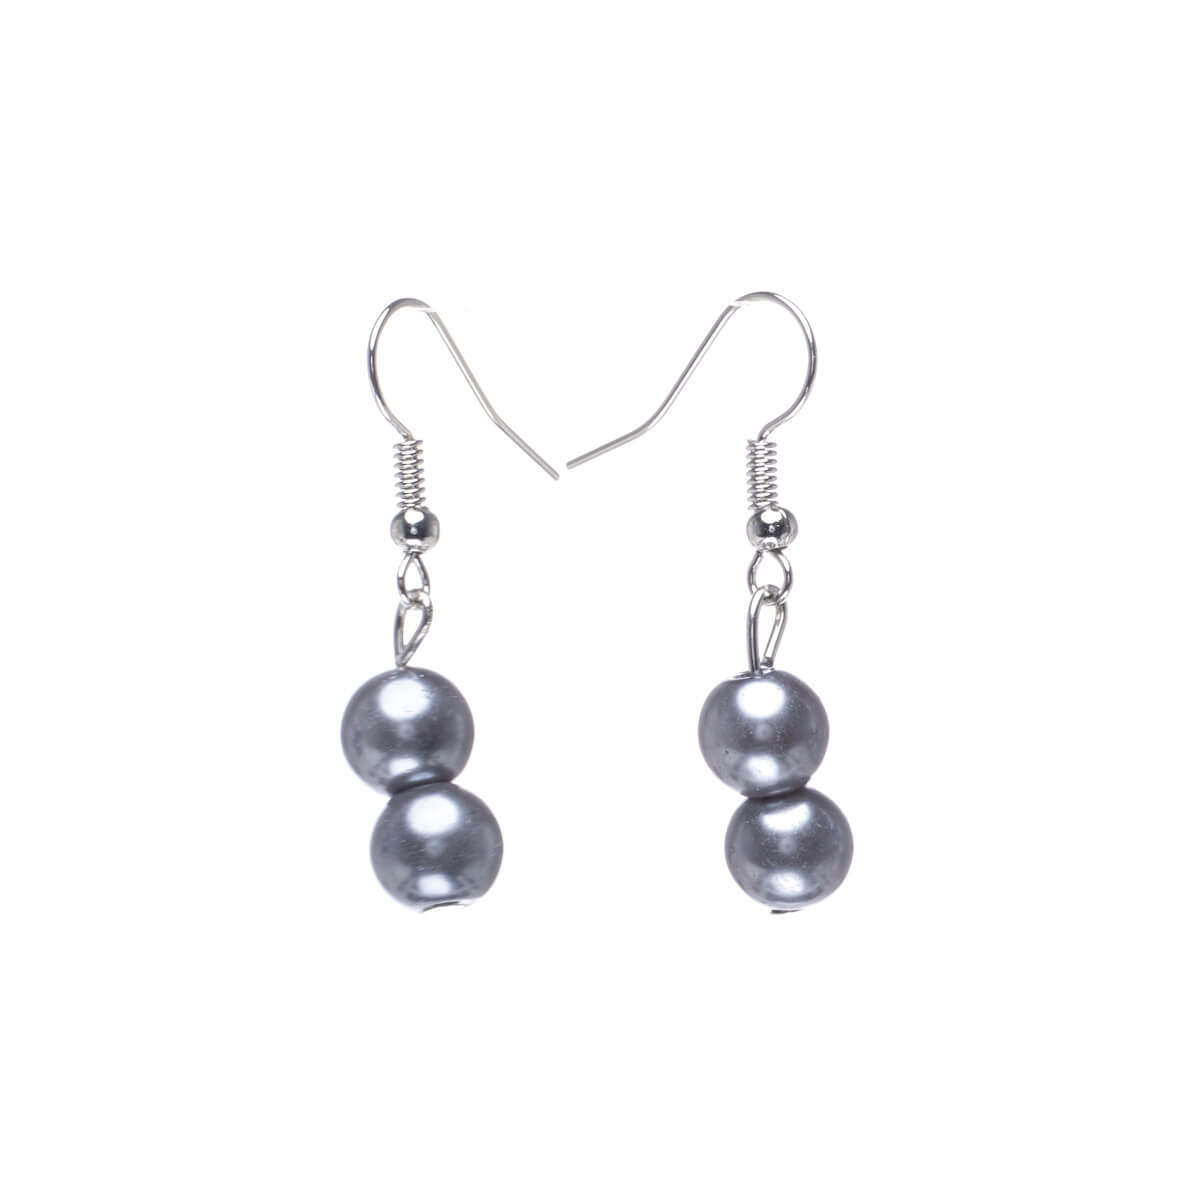 2 pearl dangling earrings